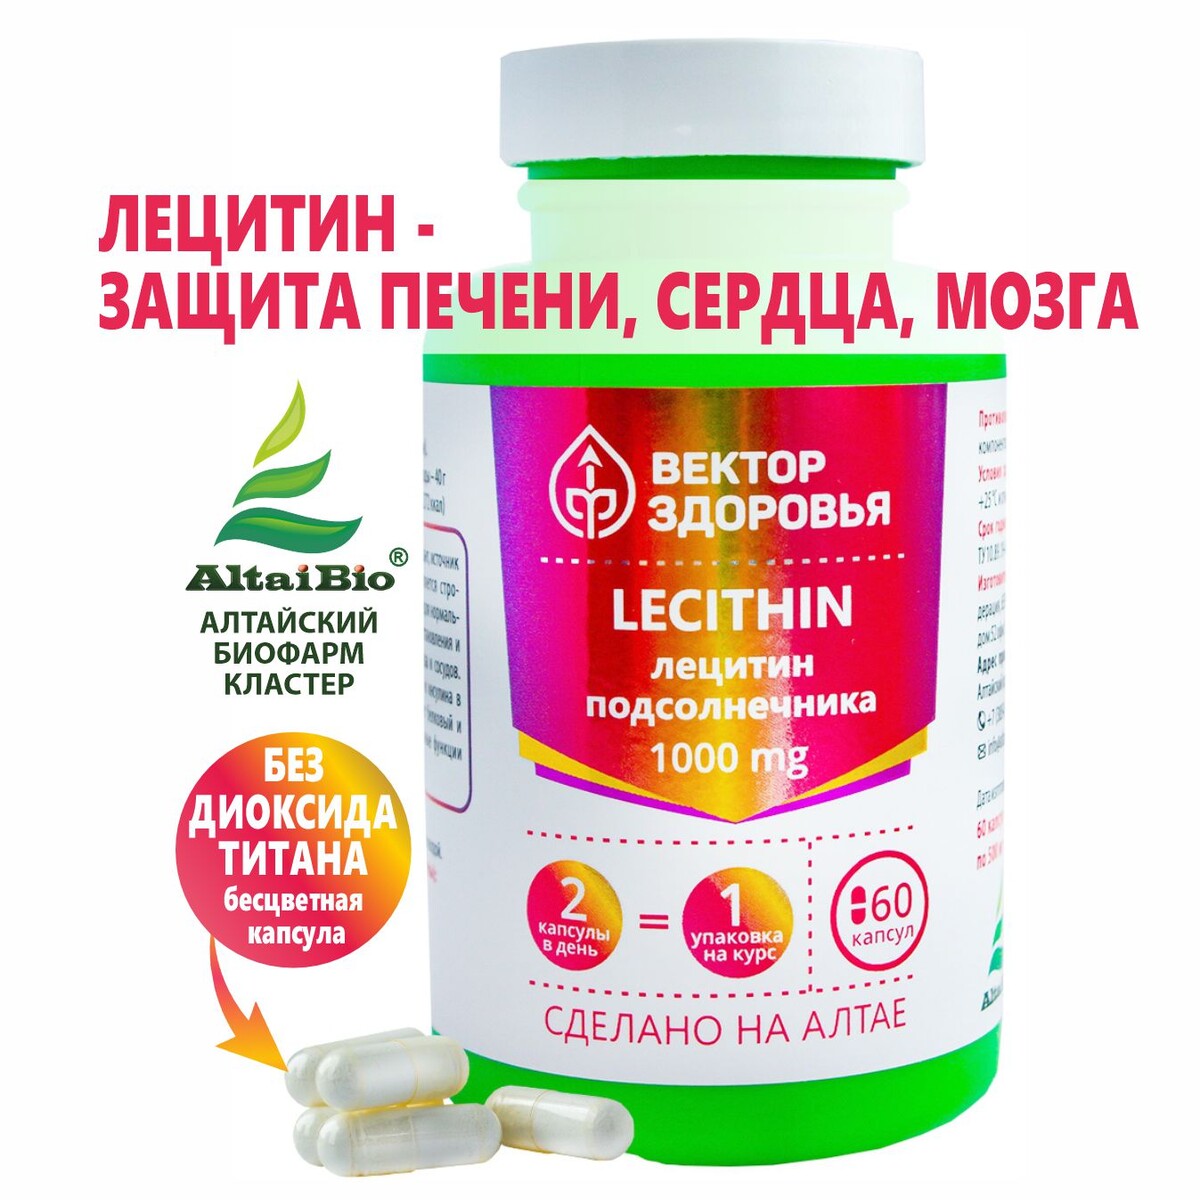 Комплекс lecithin лецитин подсолнечника семечки подсолнечника станичные байки 150 г отборные